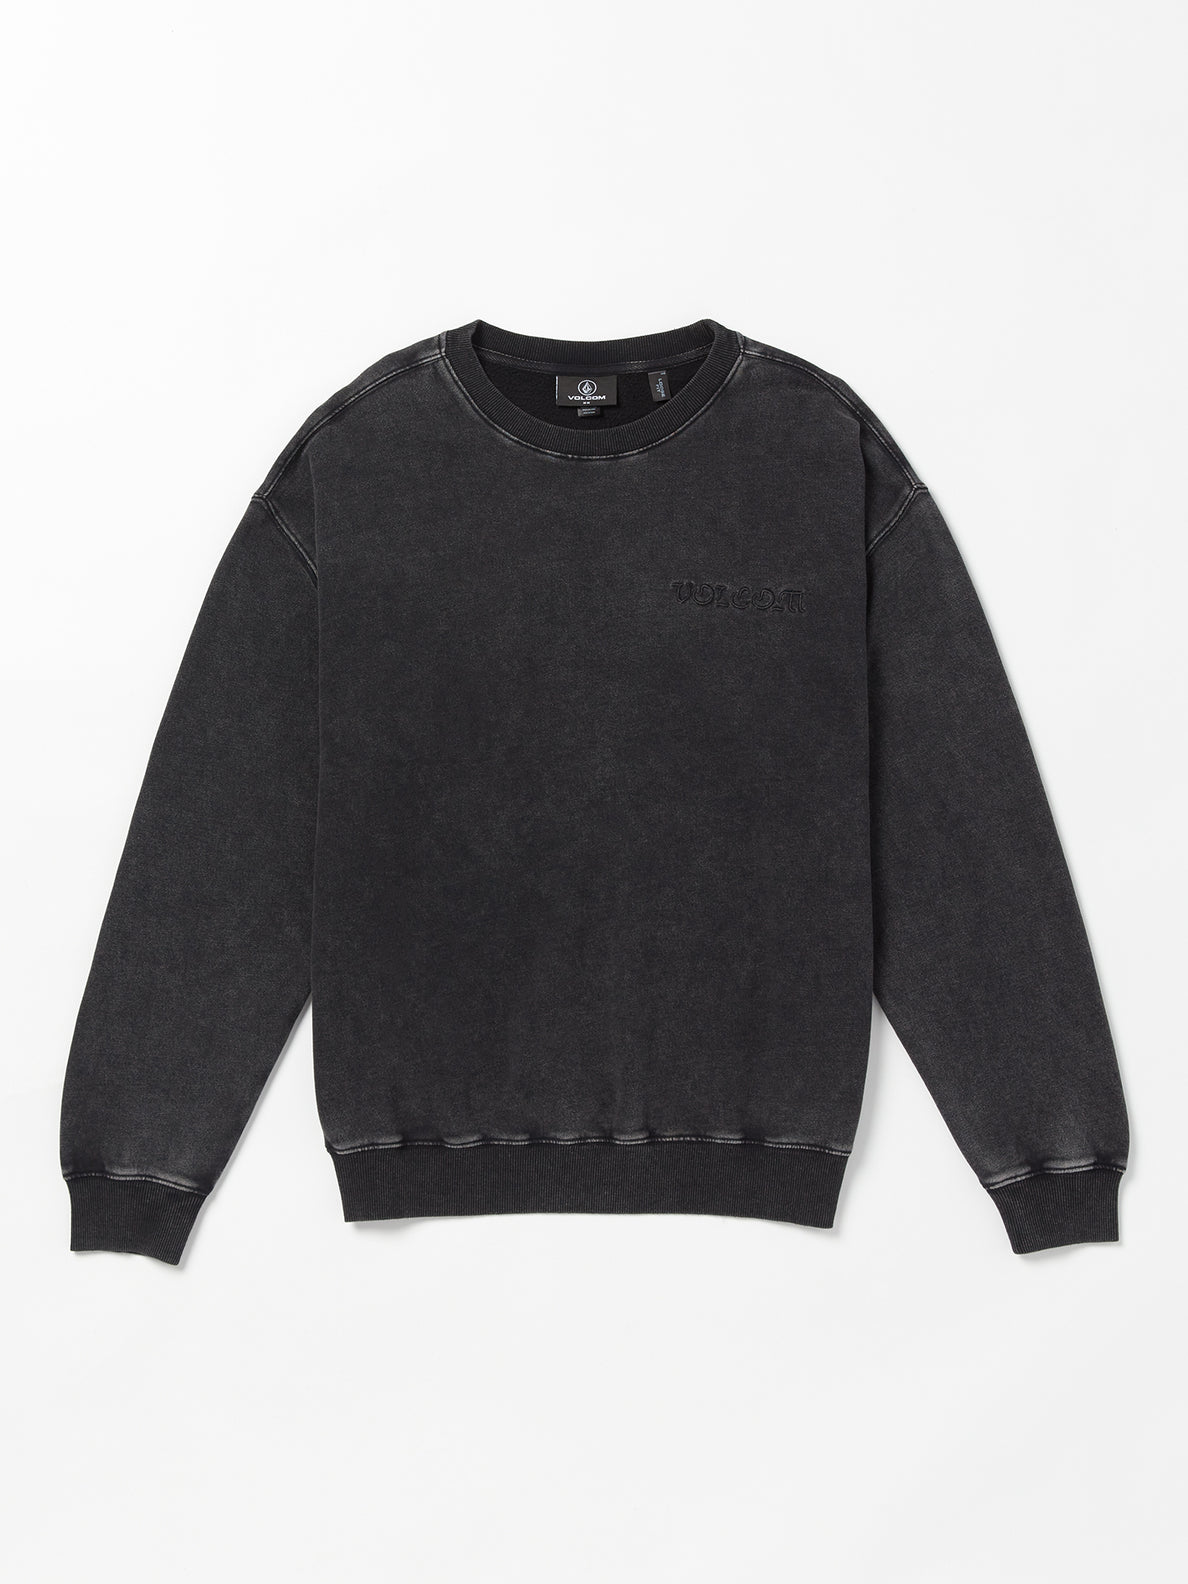 Acid Wall Crew Pullover Sweatshirt - Black (A4632301_BLK) [F]